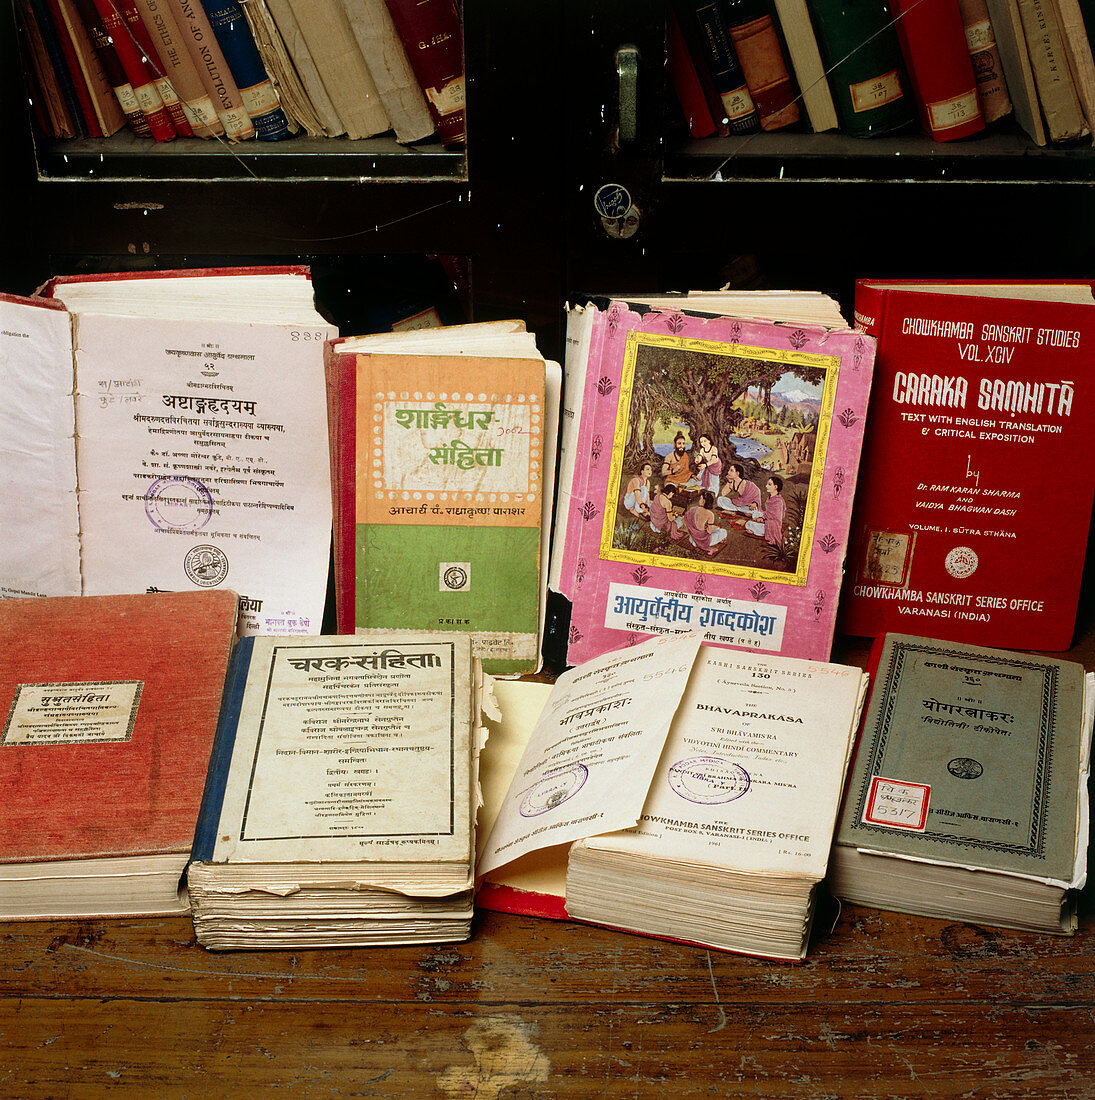 Traditional Indian medicine (Ayurvedic) textbooks